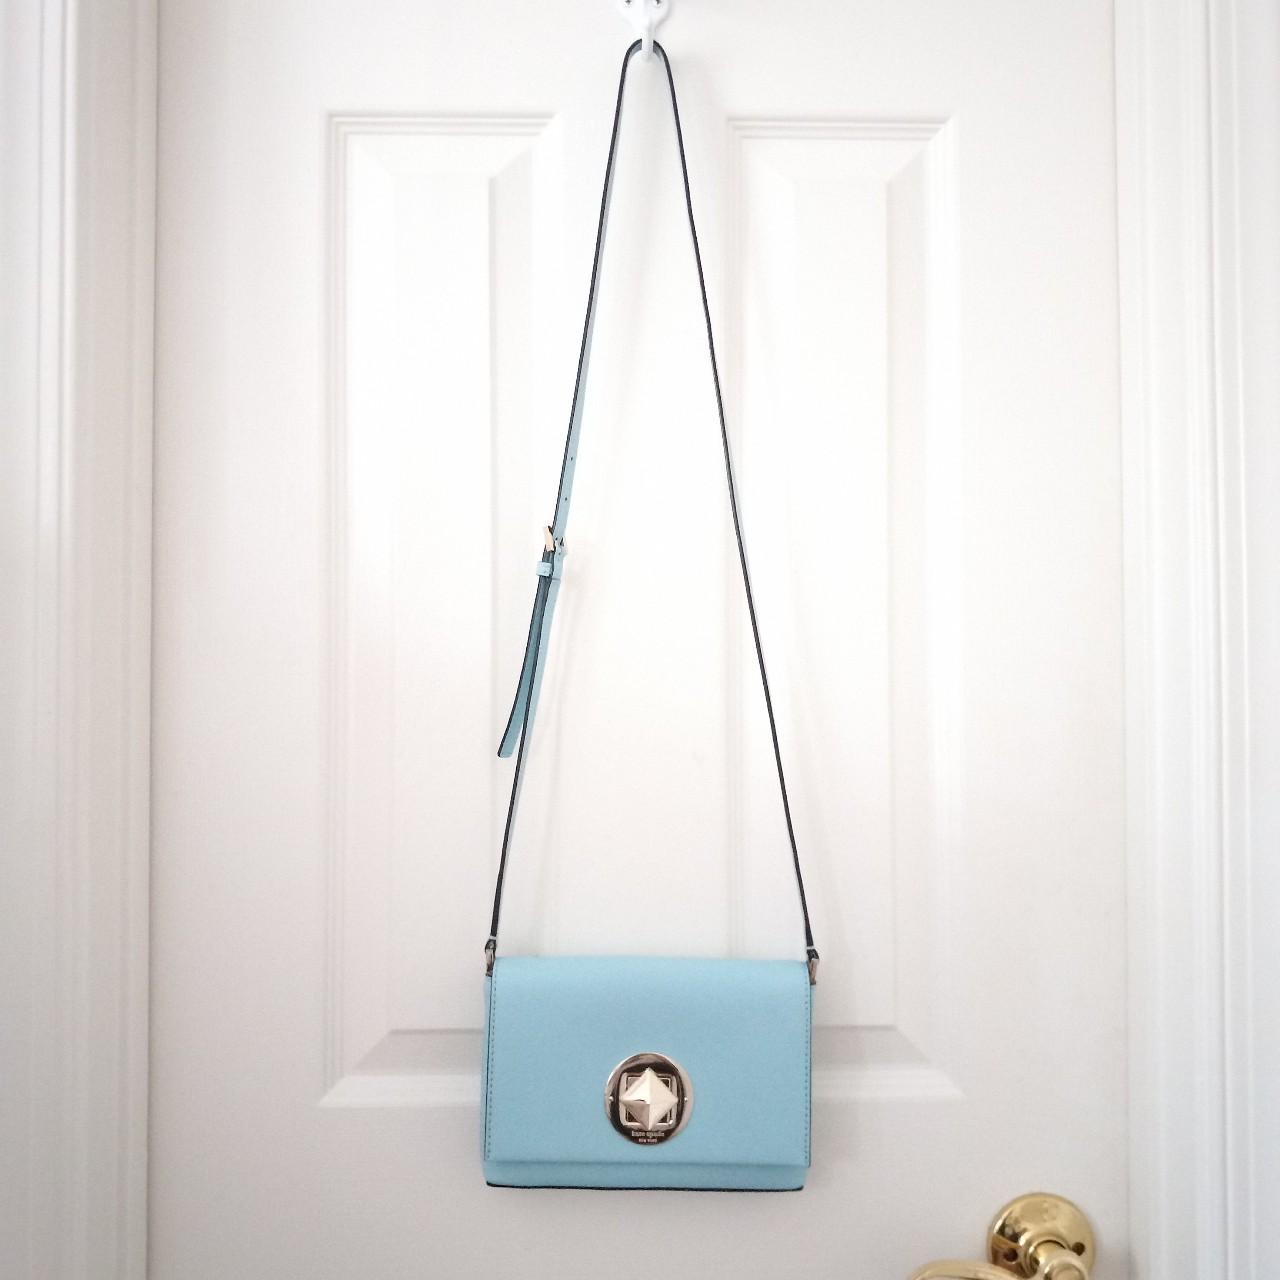 Kate Spade New York Large Lori Tote Top Zip Handbag (Fountain Blue) -  Amazon.com